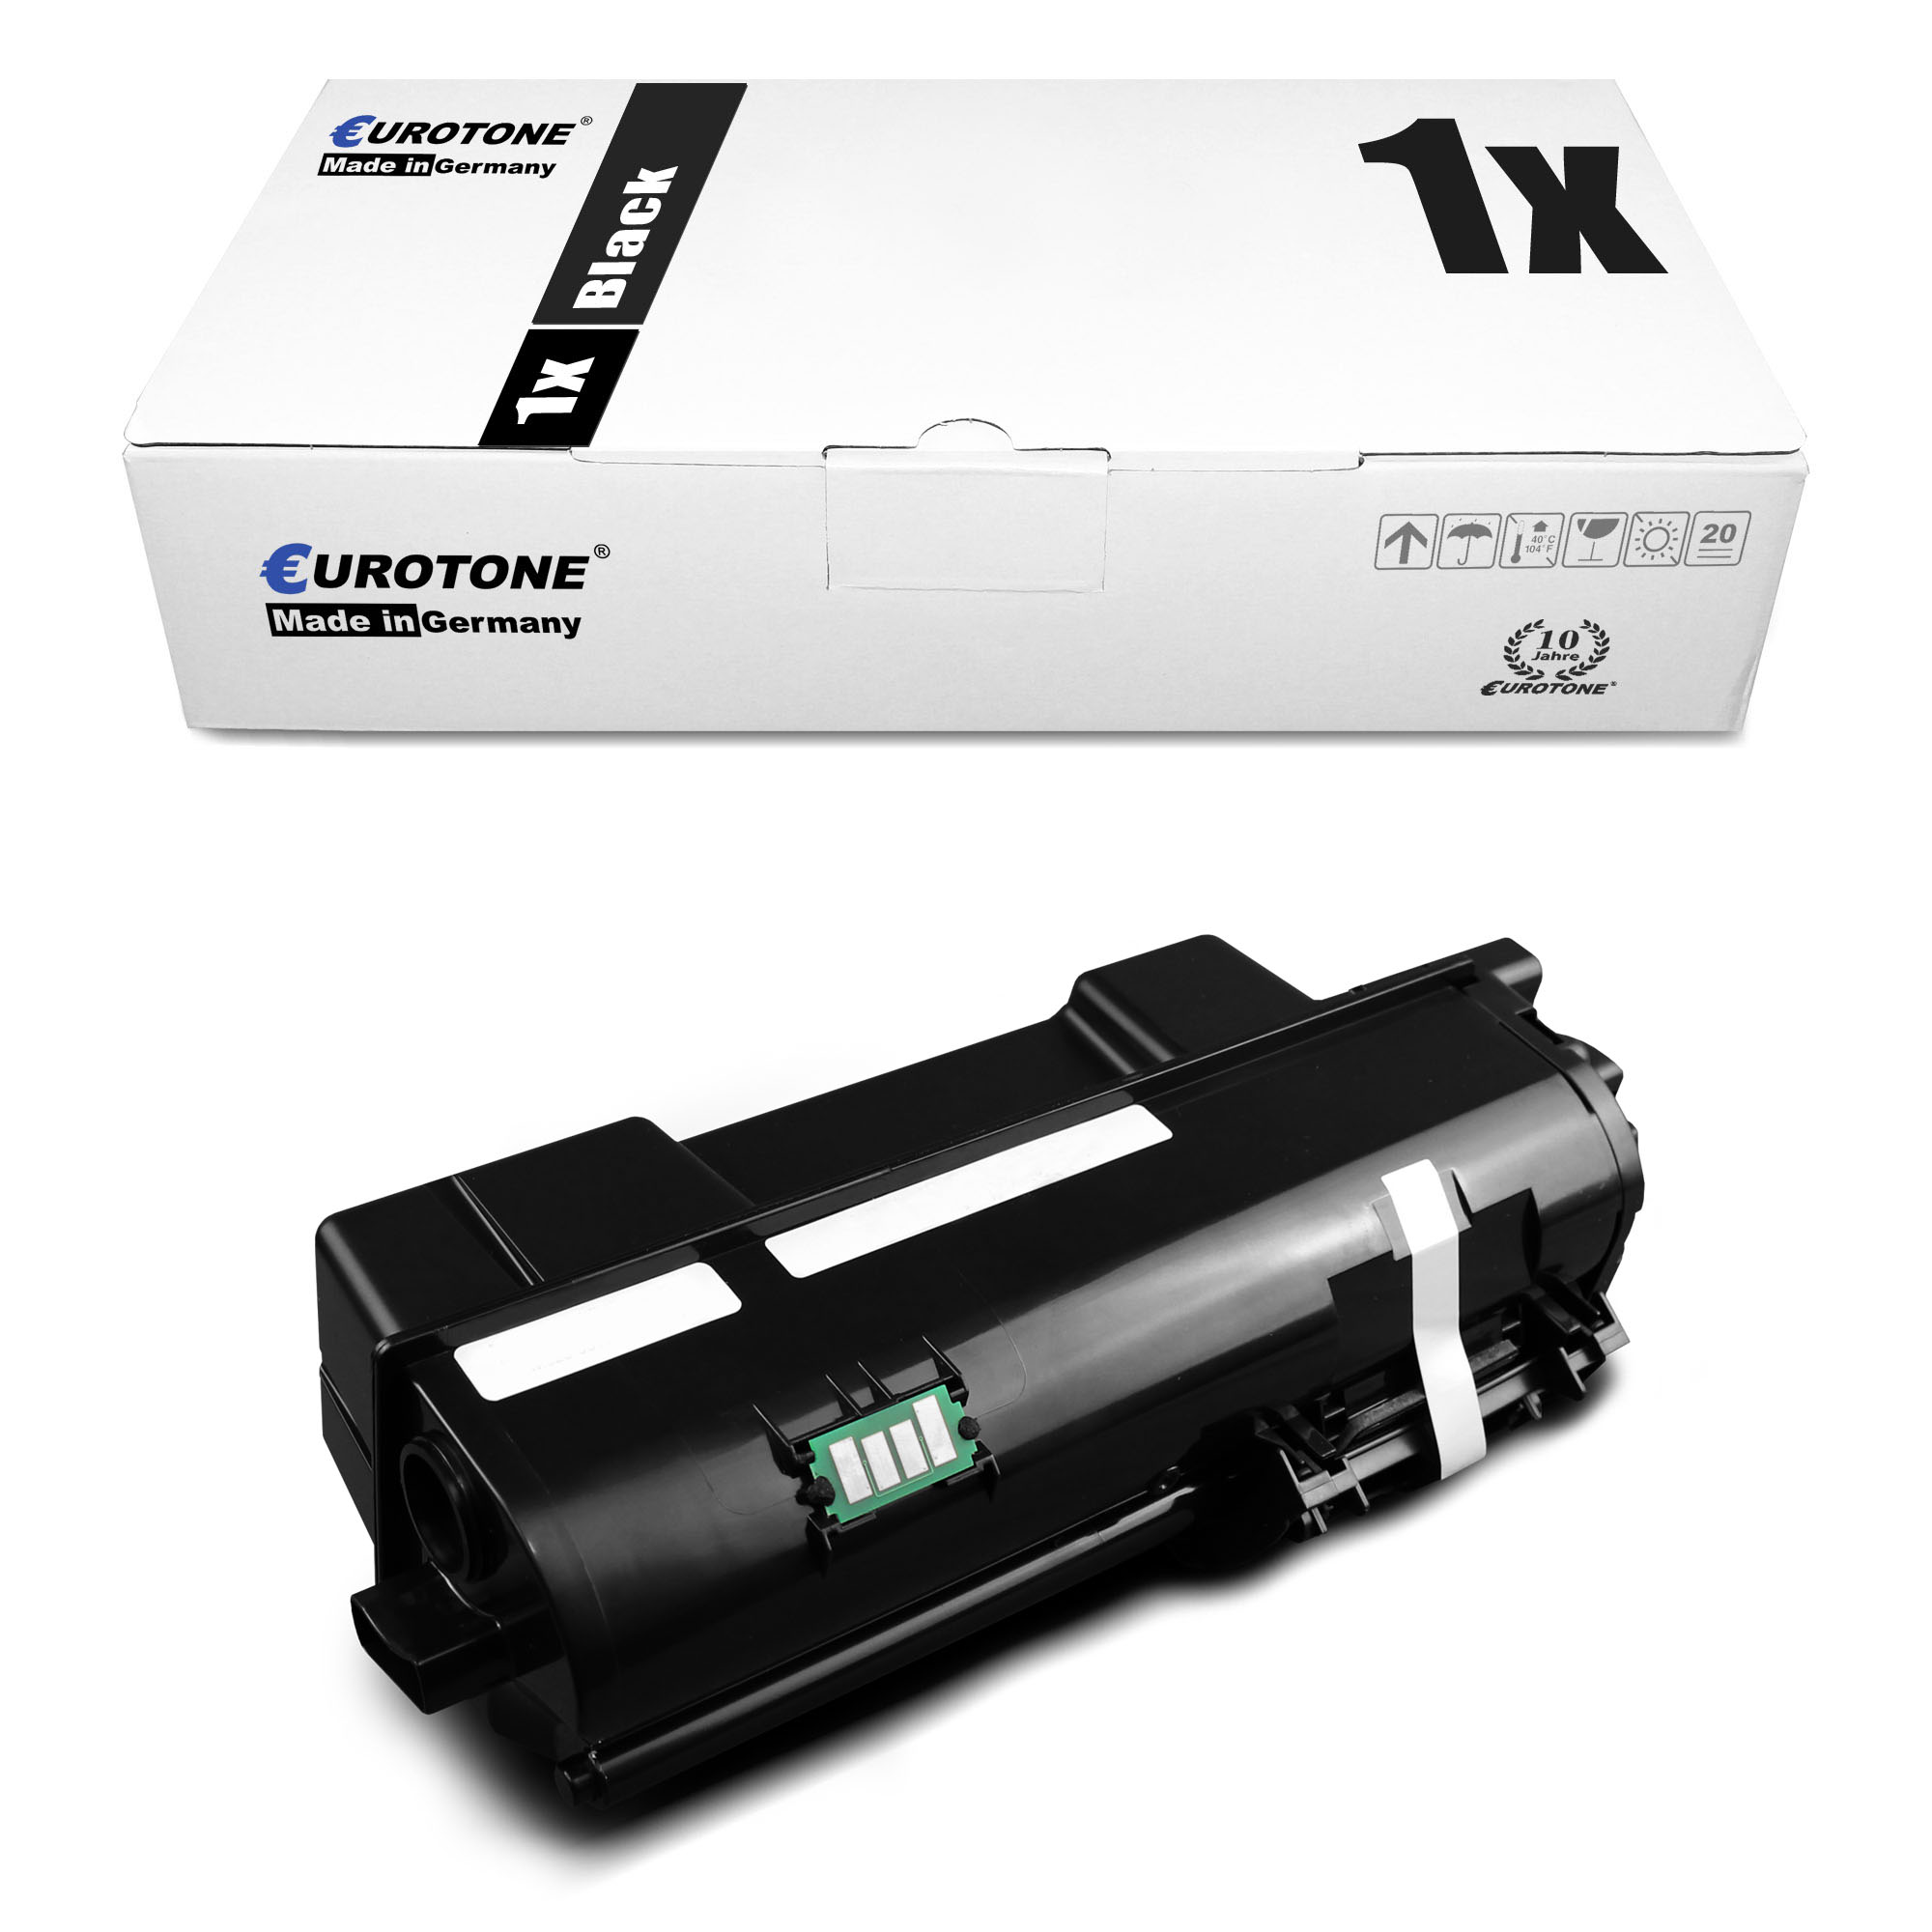 1T02RY0UT0) / Cartridge EUROTONE PK1011 Toner ET3539389 (Utax Schwarz